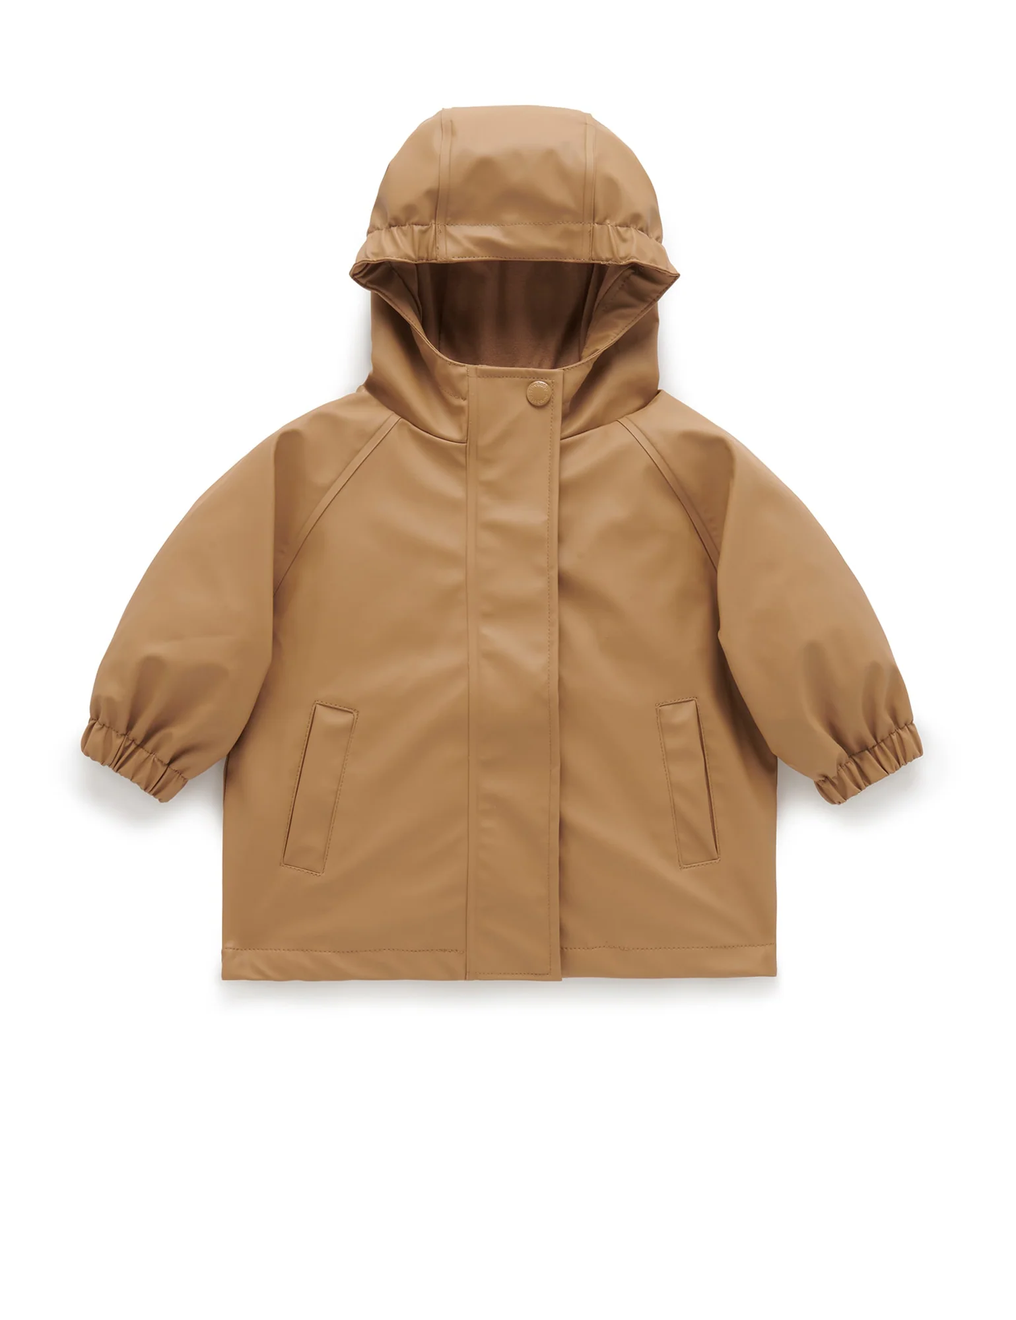 Waterproof Jacket offers at $69.95 in Purebaby